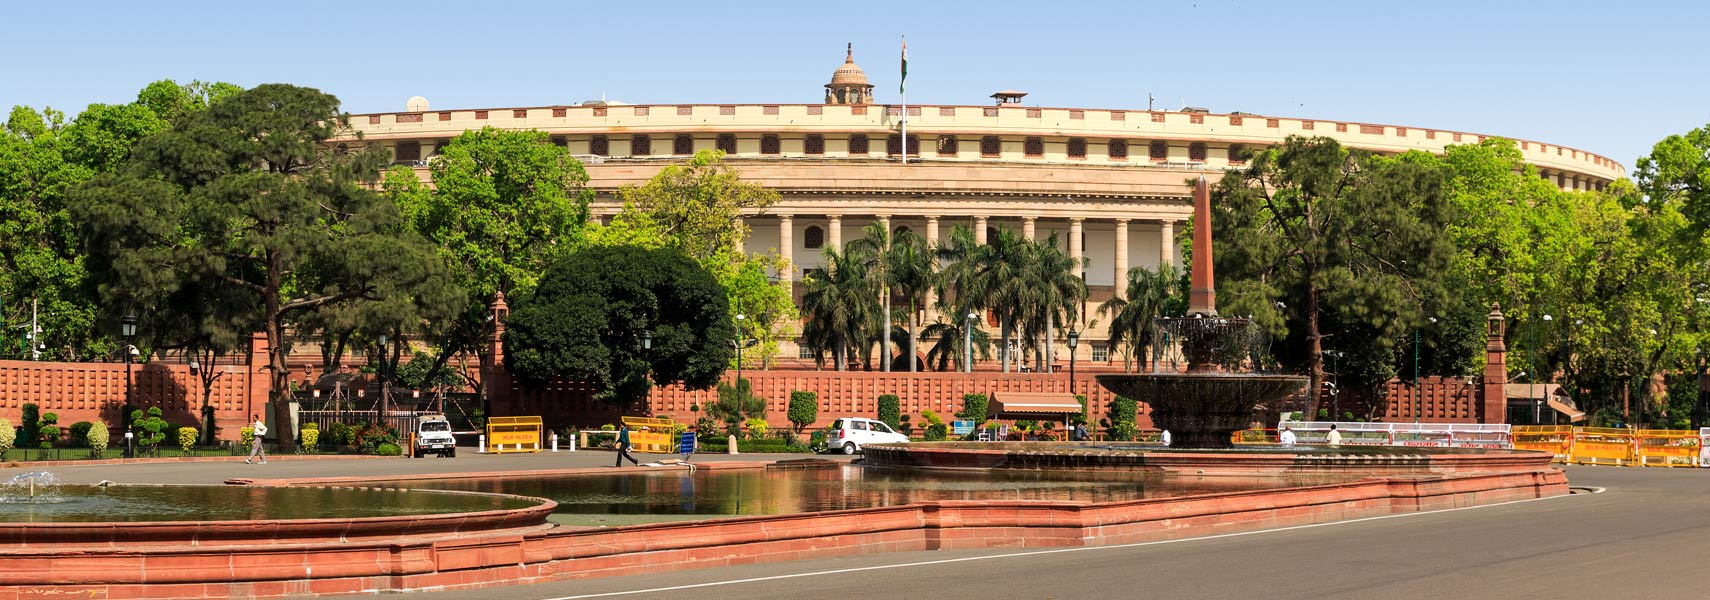 Sansad Bhawan (Parliament House) in New Delhi